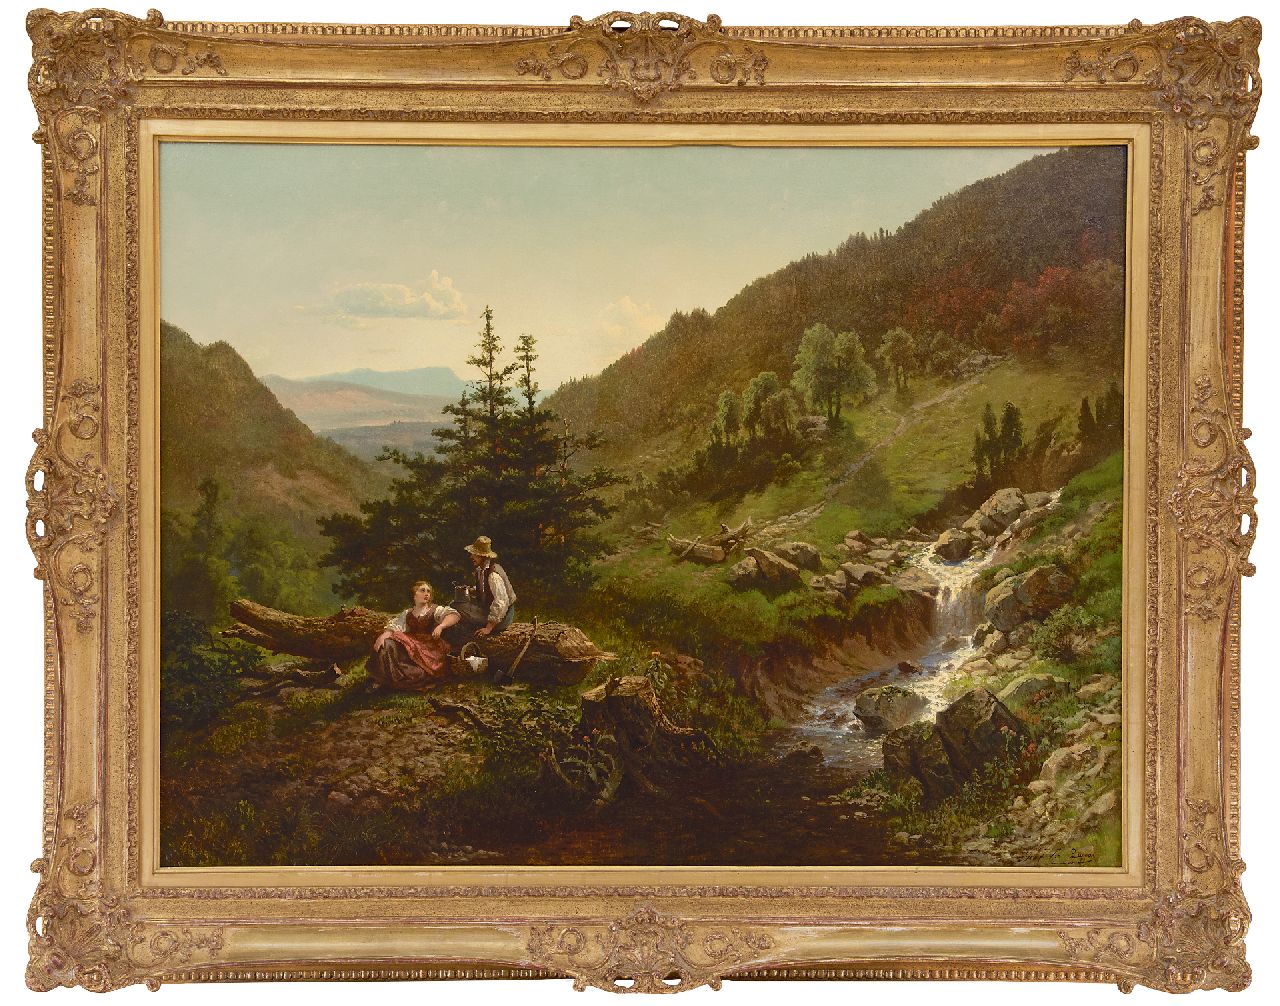 Luppen J.G.A. van | 'Joseph' Gérard Adrien van Luppen | Paintings offered for sale | Landscape with shepherd couple, oil on canvas 76.2 x 101.2 cm, signed l.r.